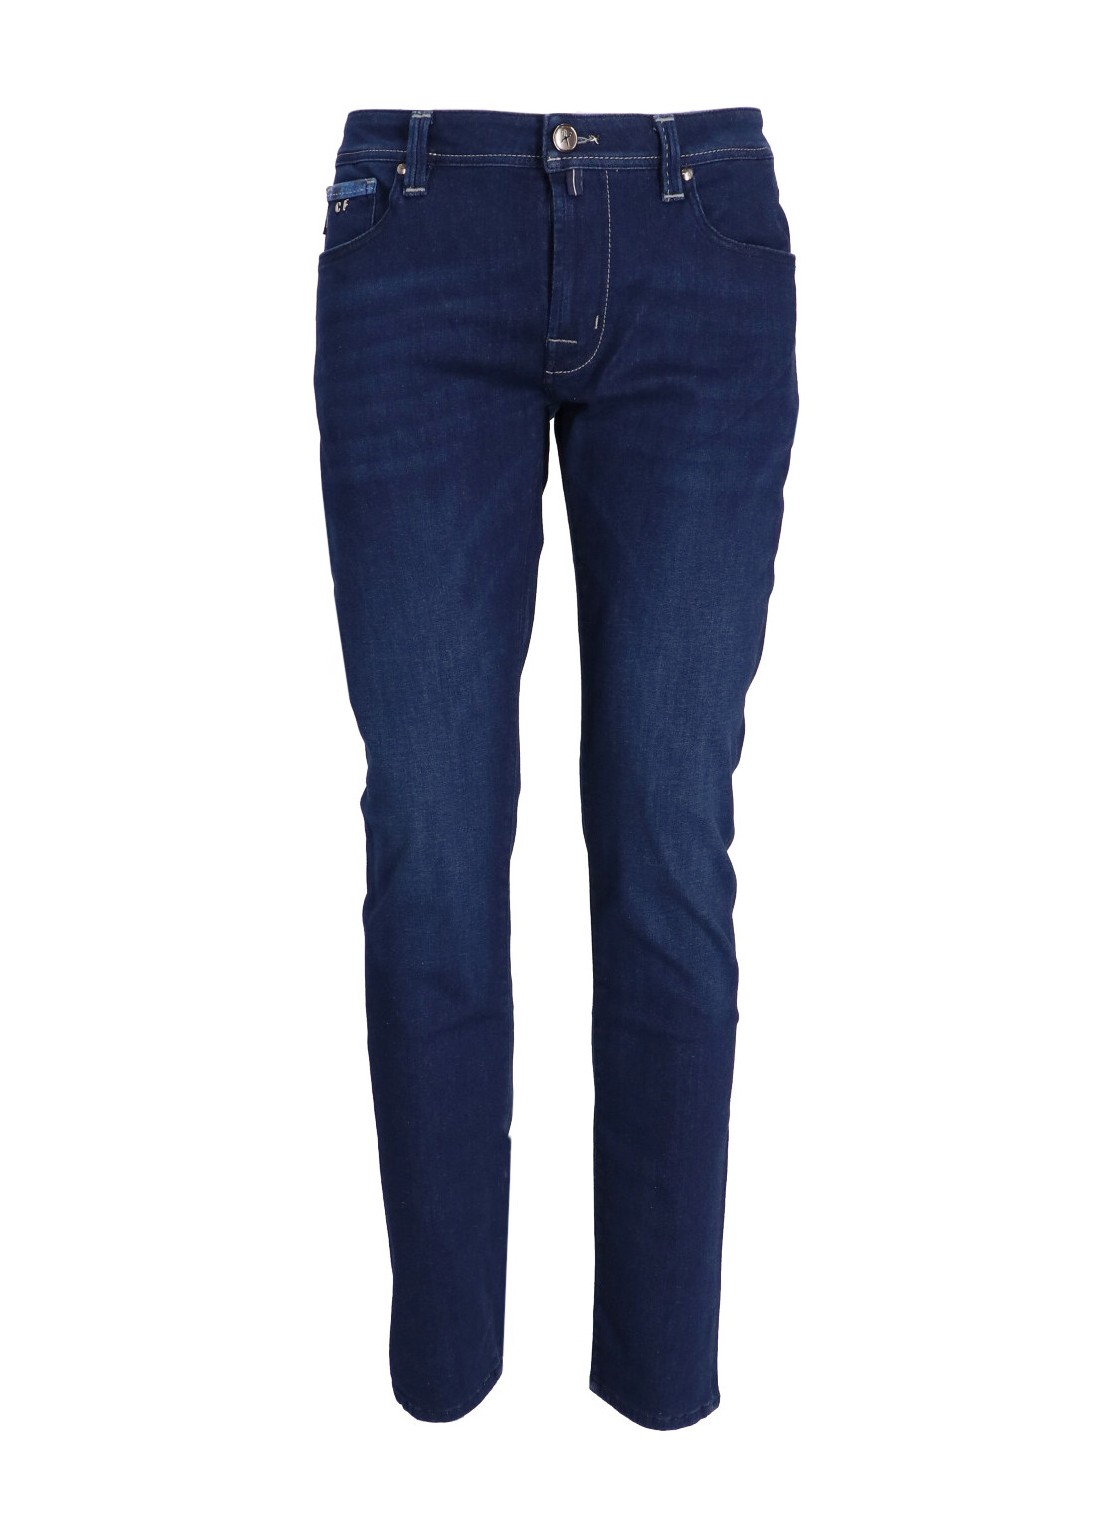 Pantalon jeans tramarossa denim man leonardo zip stre leonardo zip stre 23i13 talla 34
 